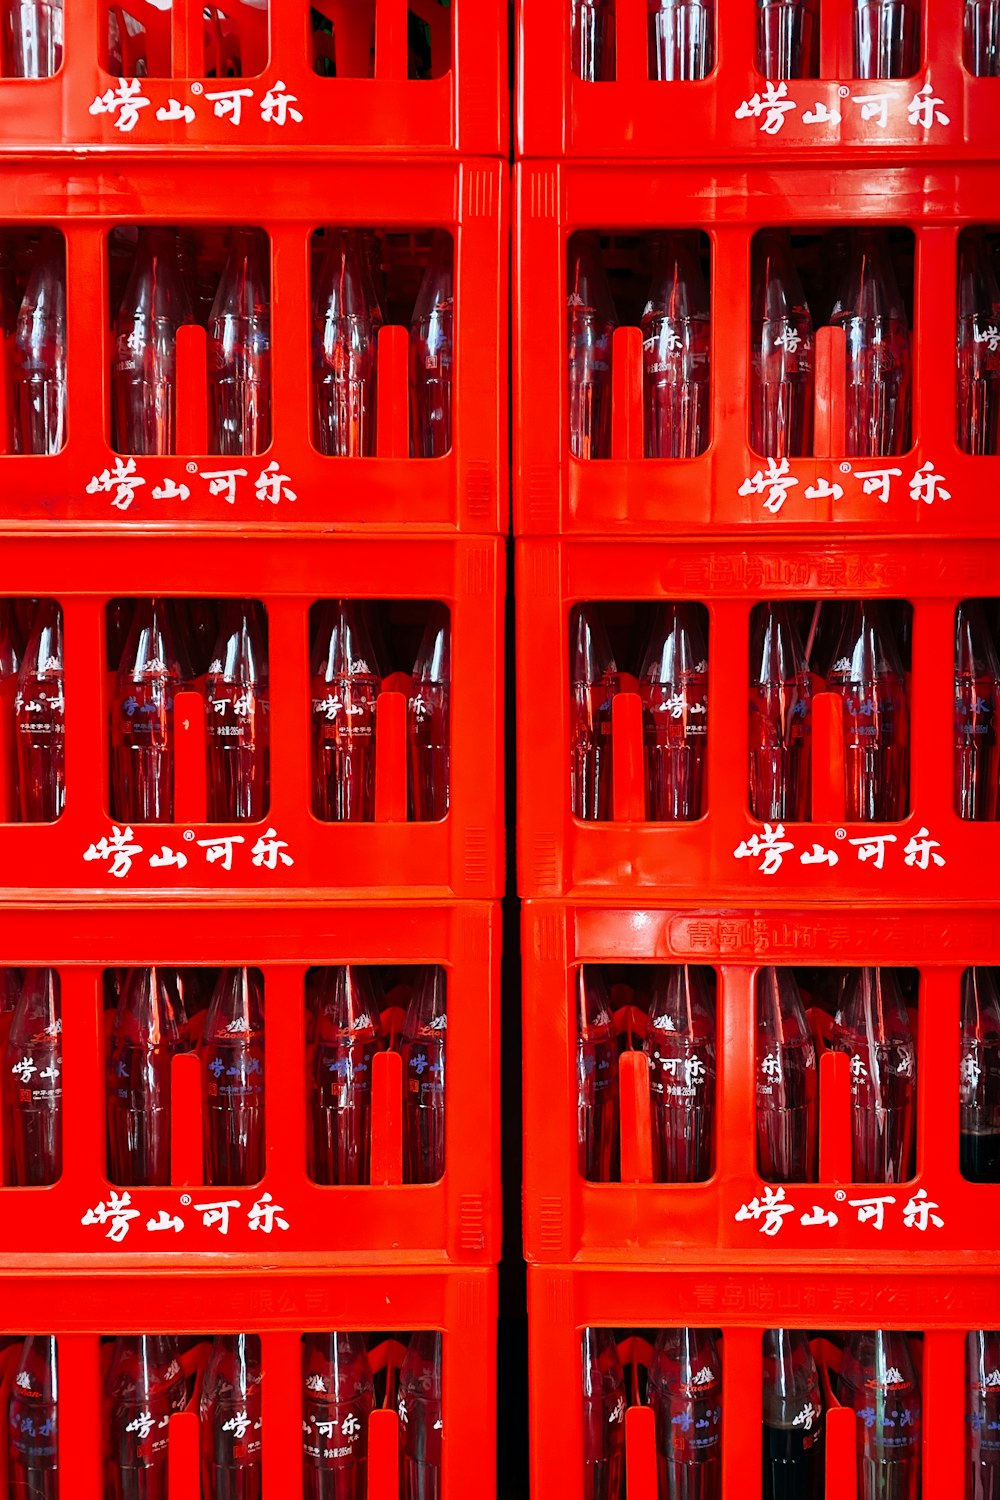 coca cola bottles on red wooden shelf